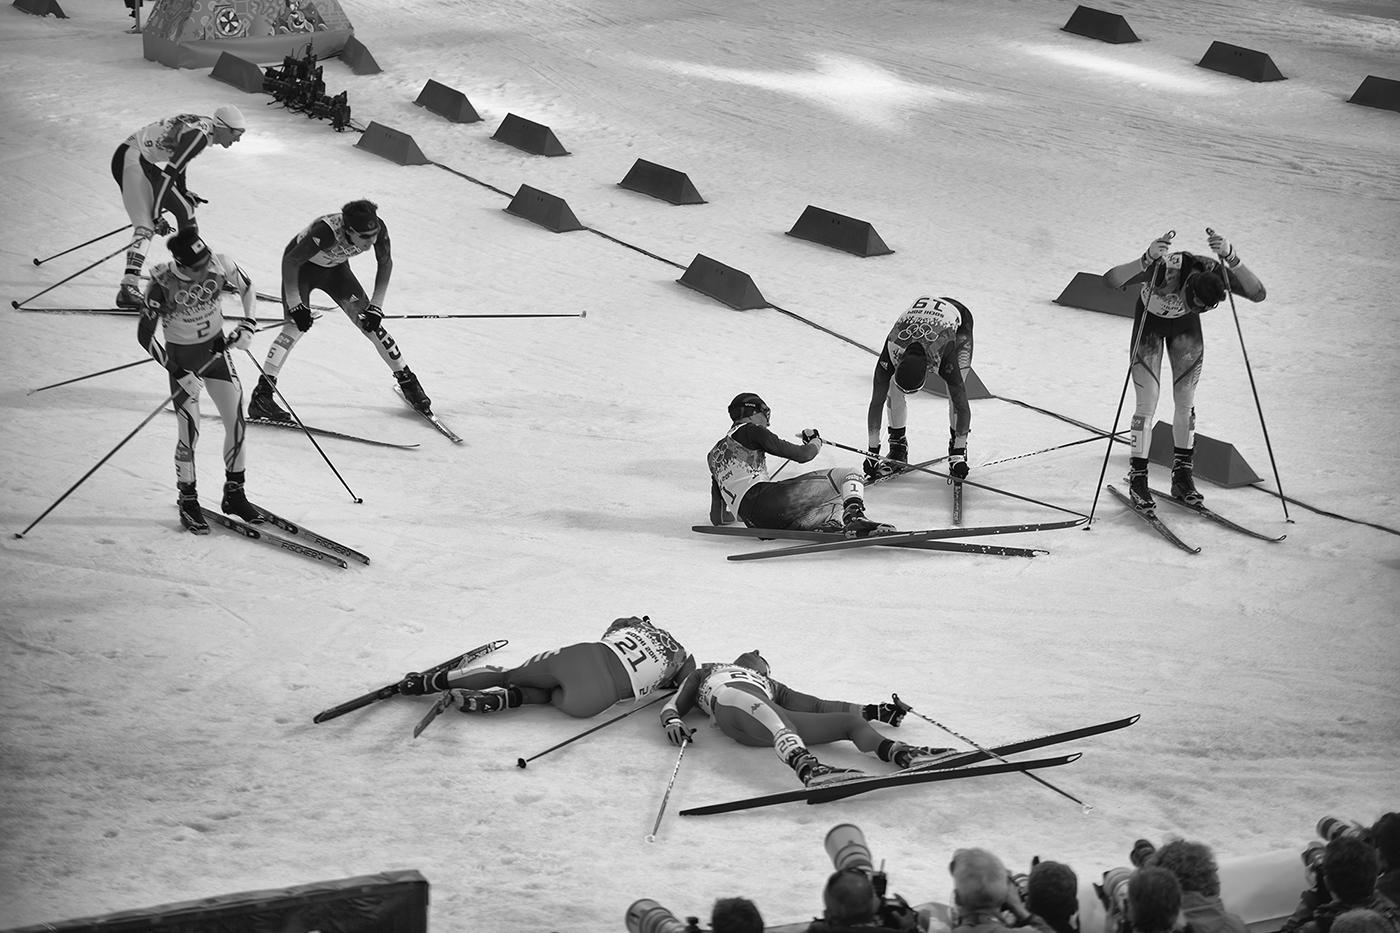 Collapsing at the end of Biathlon. They leave it all on the track.  ©2014 David Burnett/IOC : Sochi 2014 - the Winter Games : David Burnett | Photographer